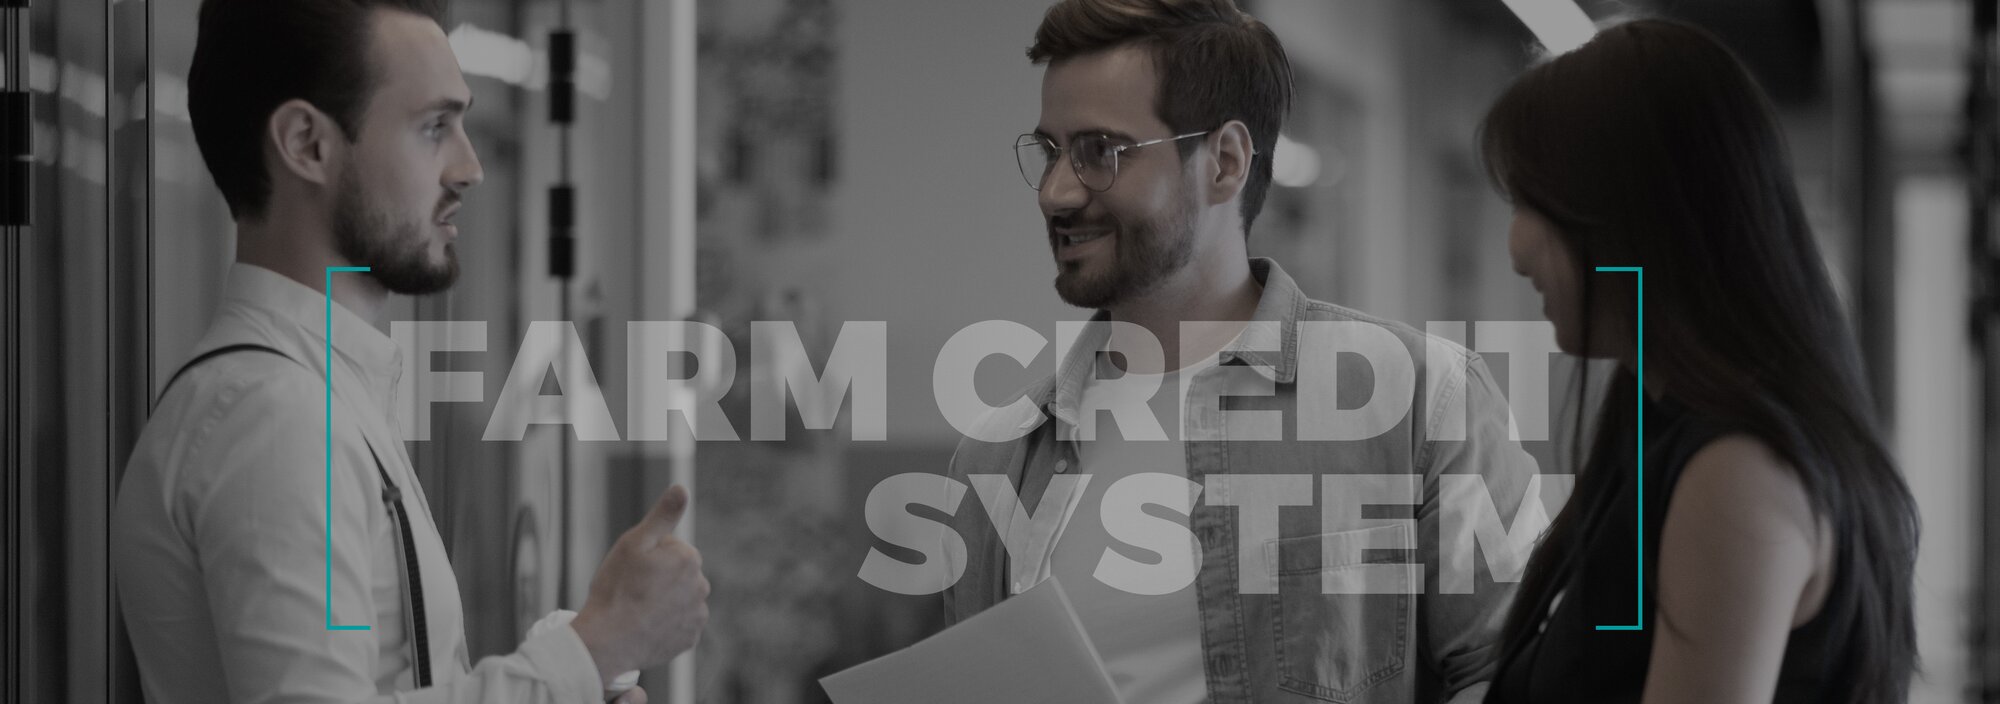 Farm Credit System peers talking